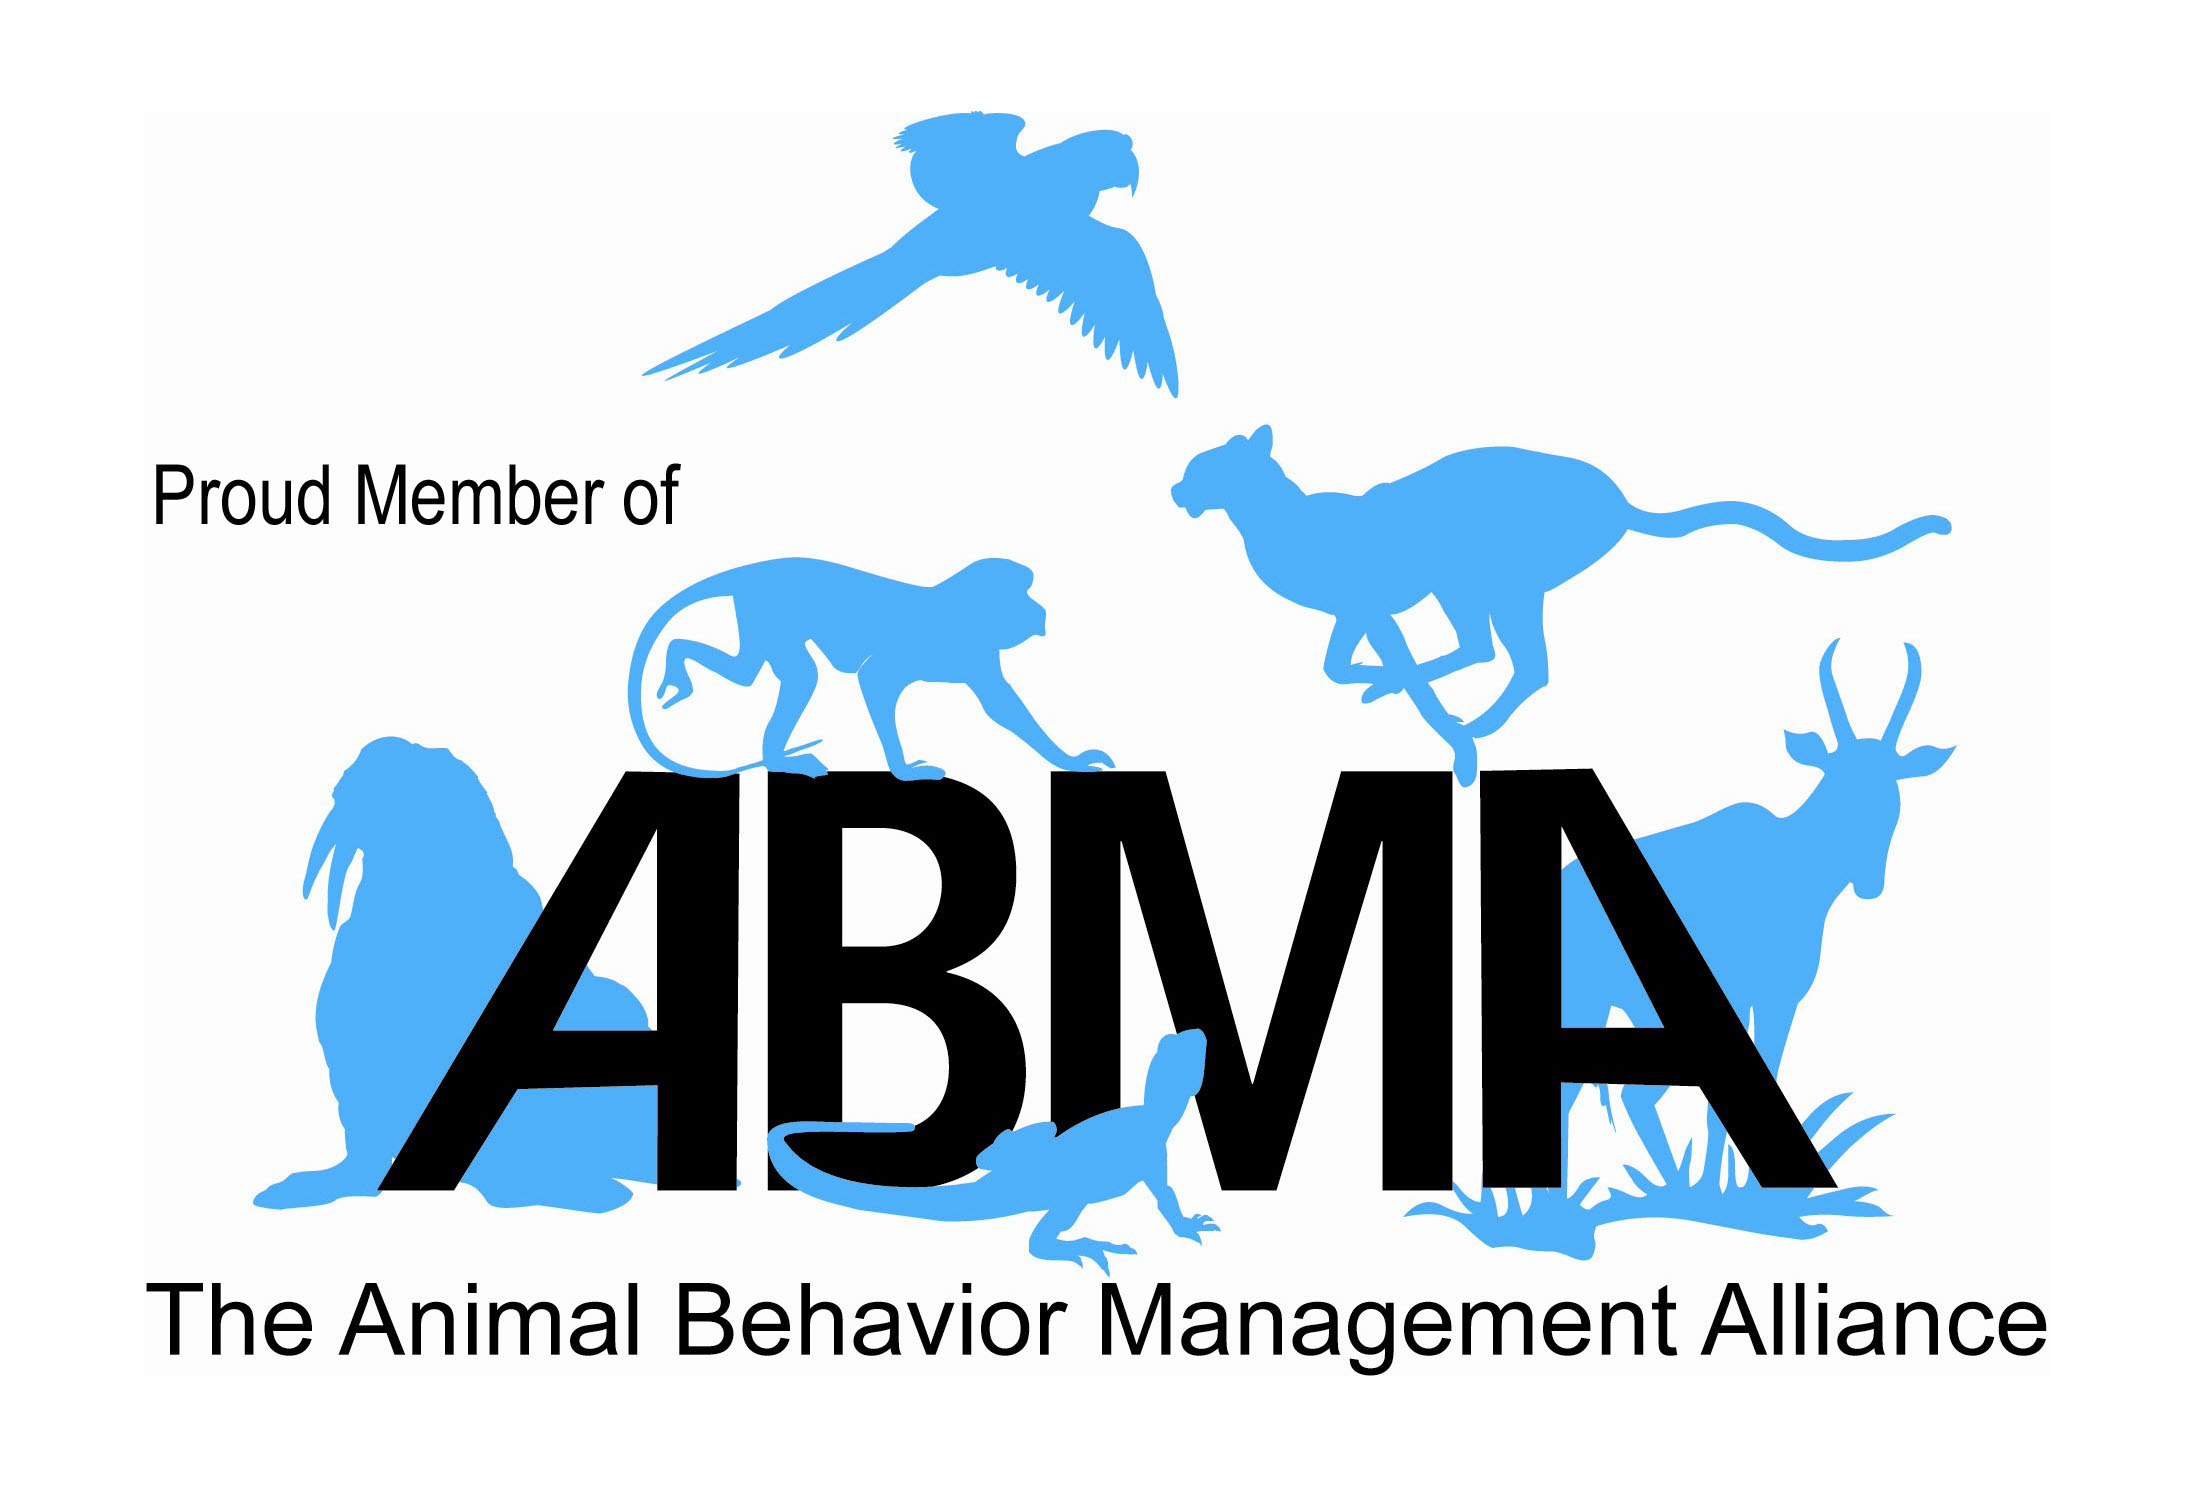 Service Dog Express, a proud member of The Animal Behavior Management Alliance